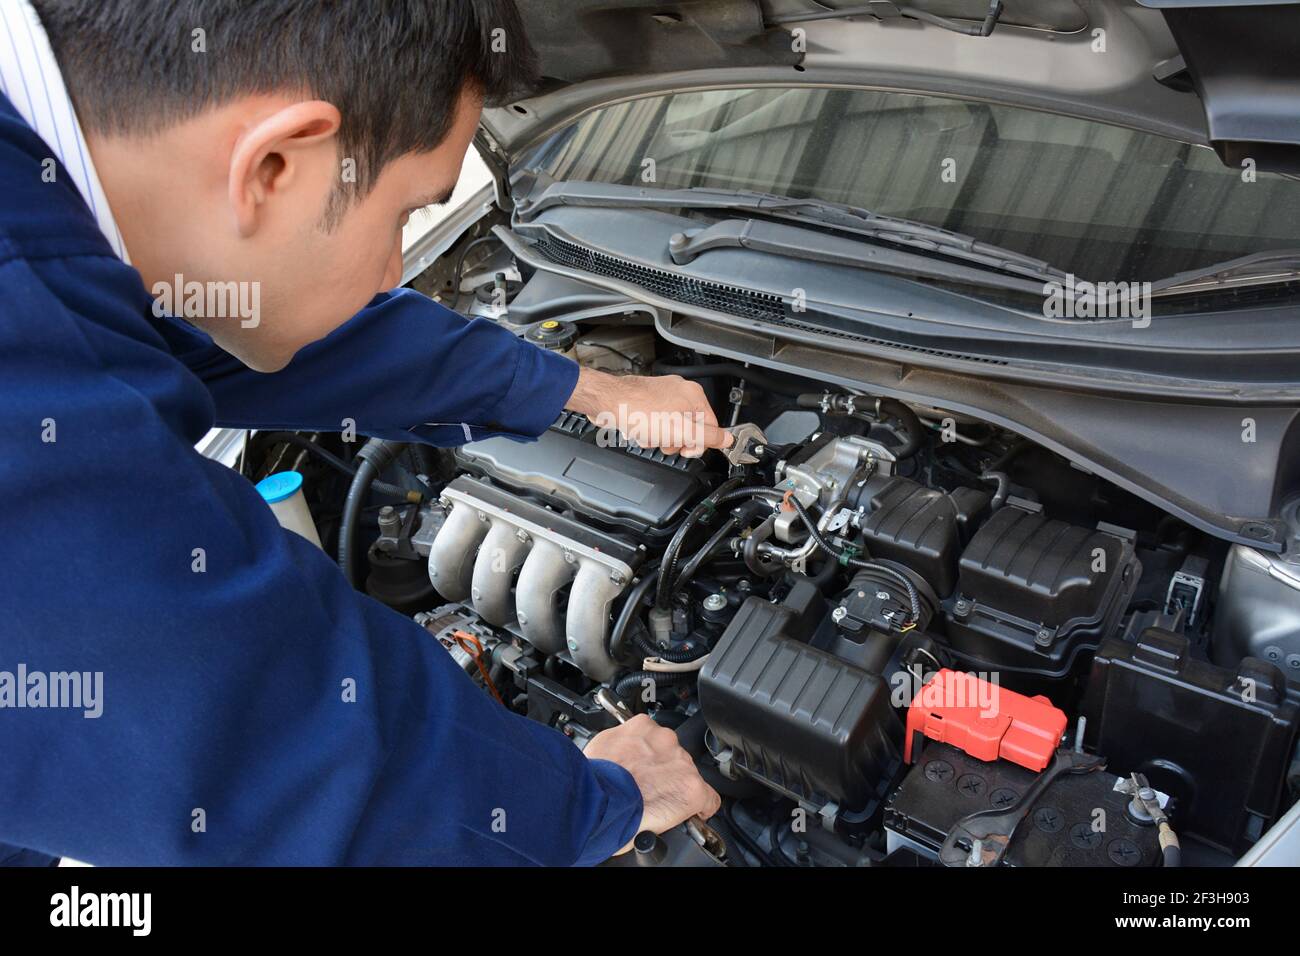 Auto mechanic (or technician) fixing car engine Stock Photo